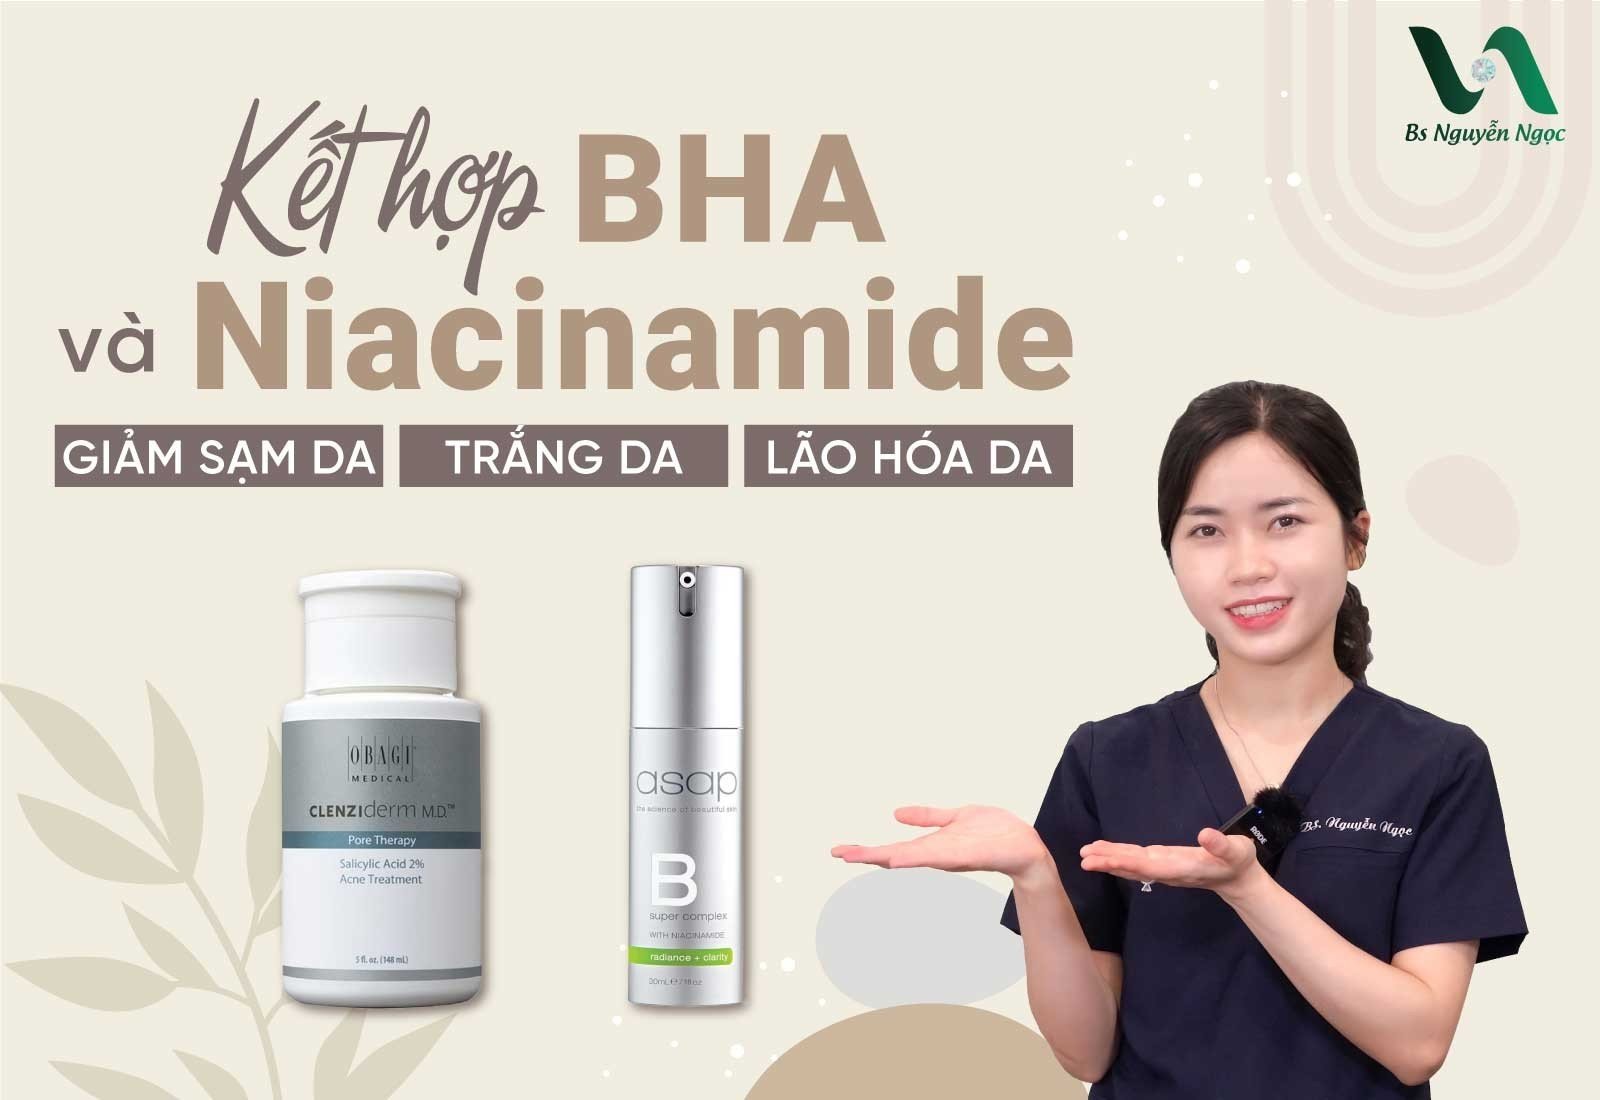 Kết hợp BHA và Niacinamide trắng da, giảm sạm da, lão hóa da